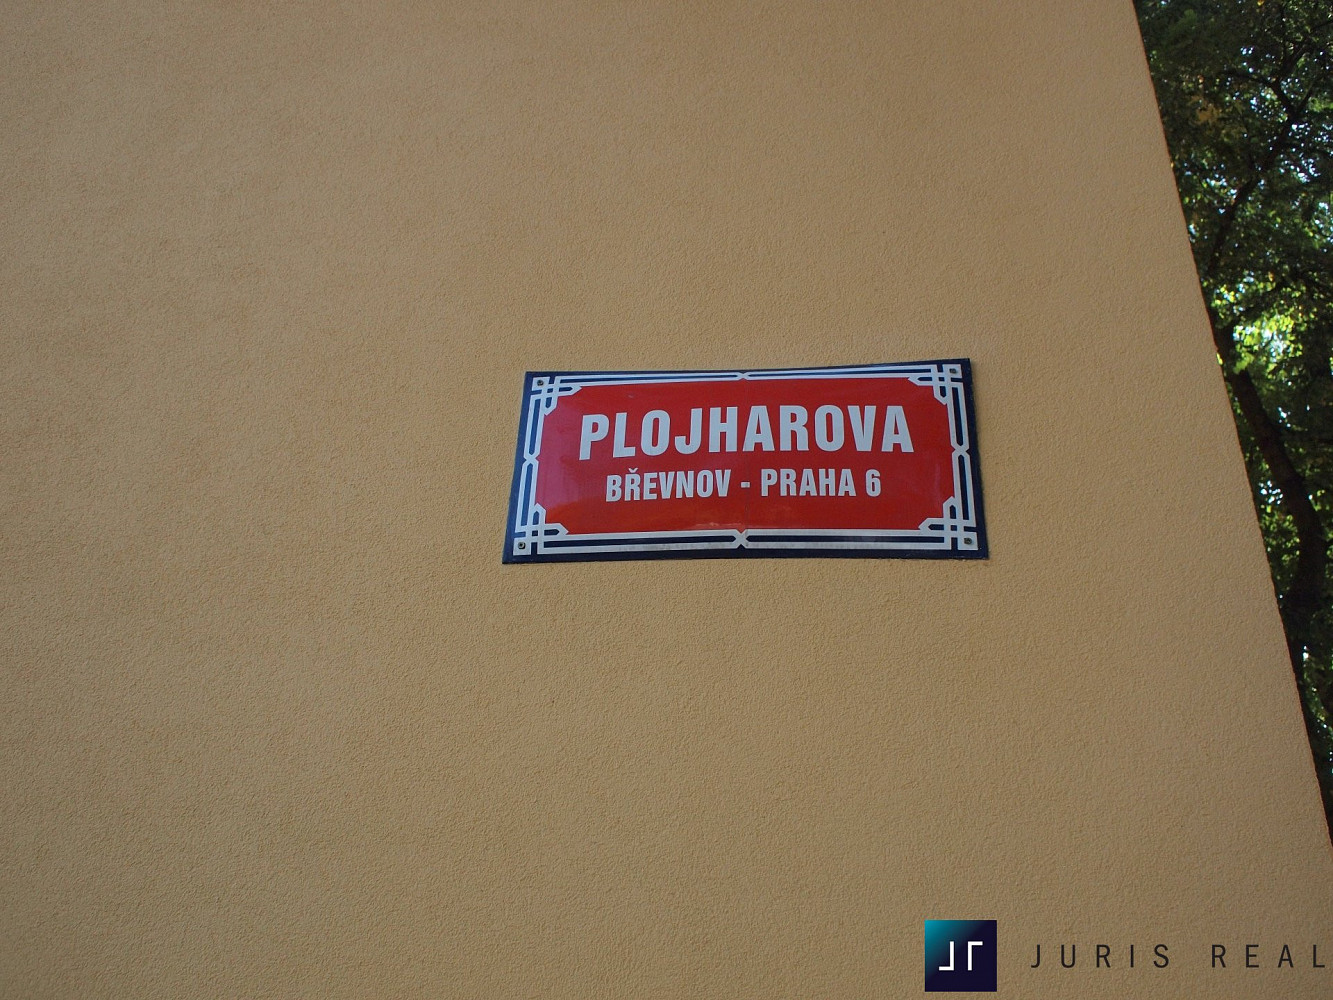 Plojharova, Praha 6 - Břevnov